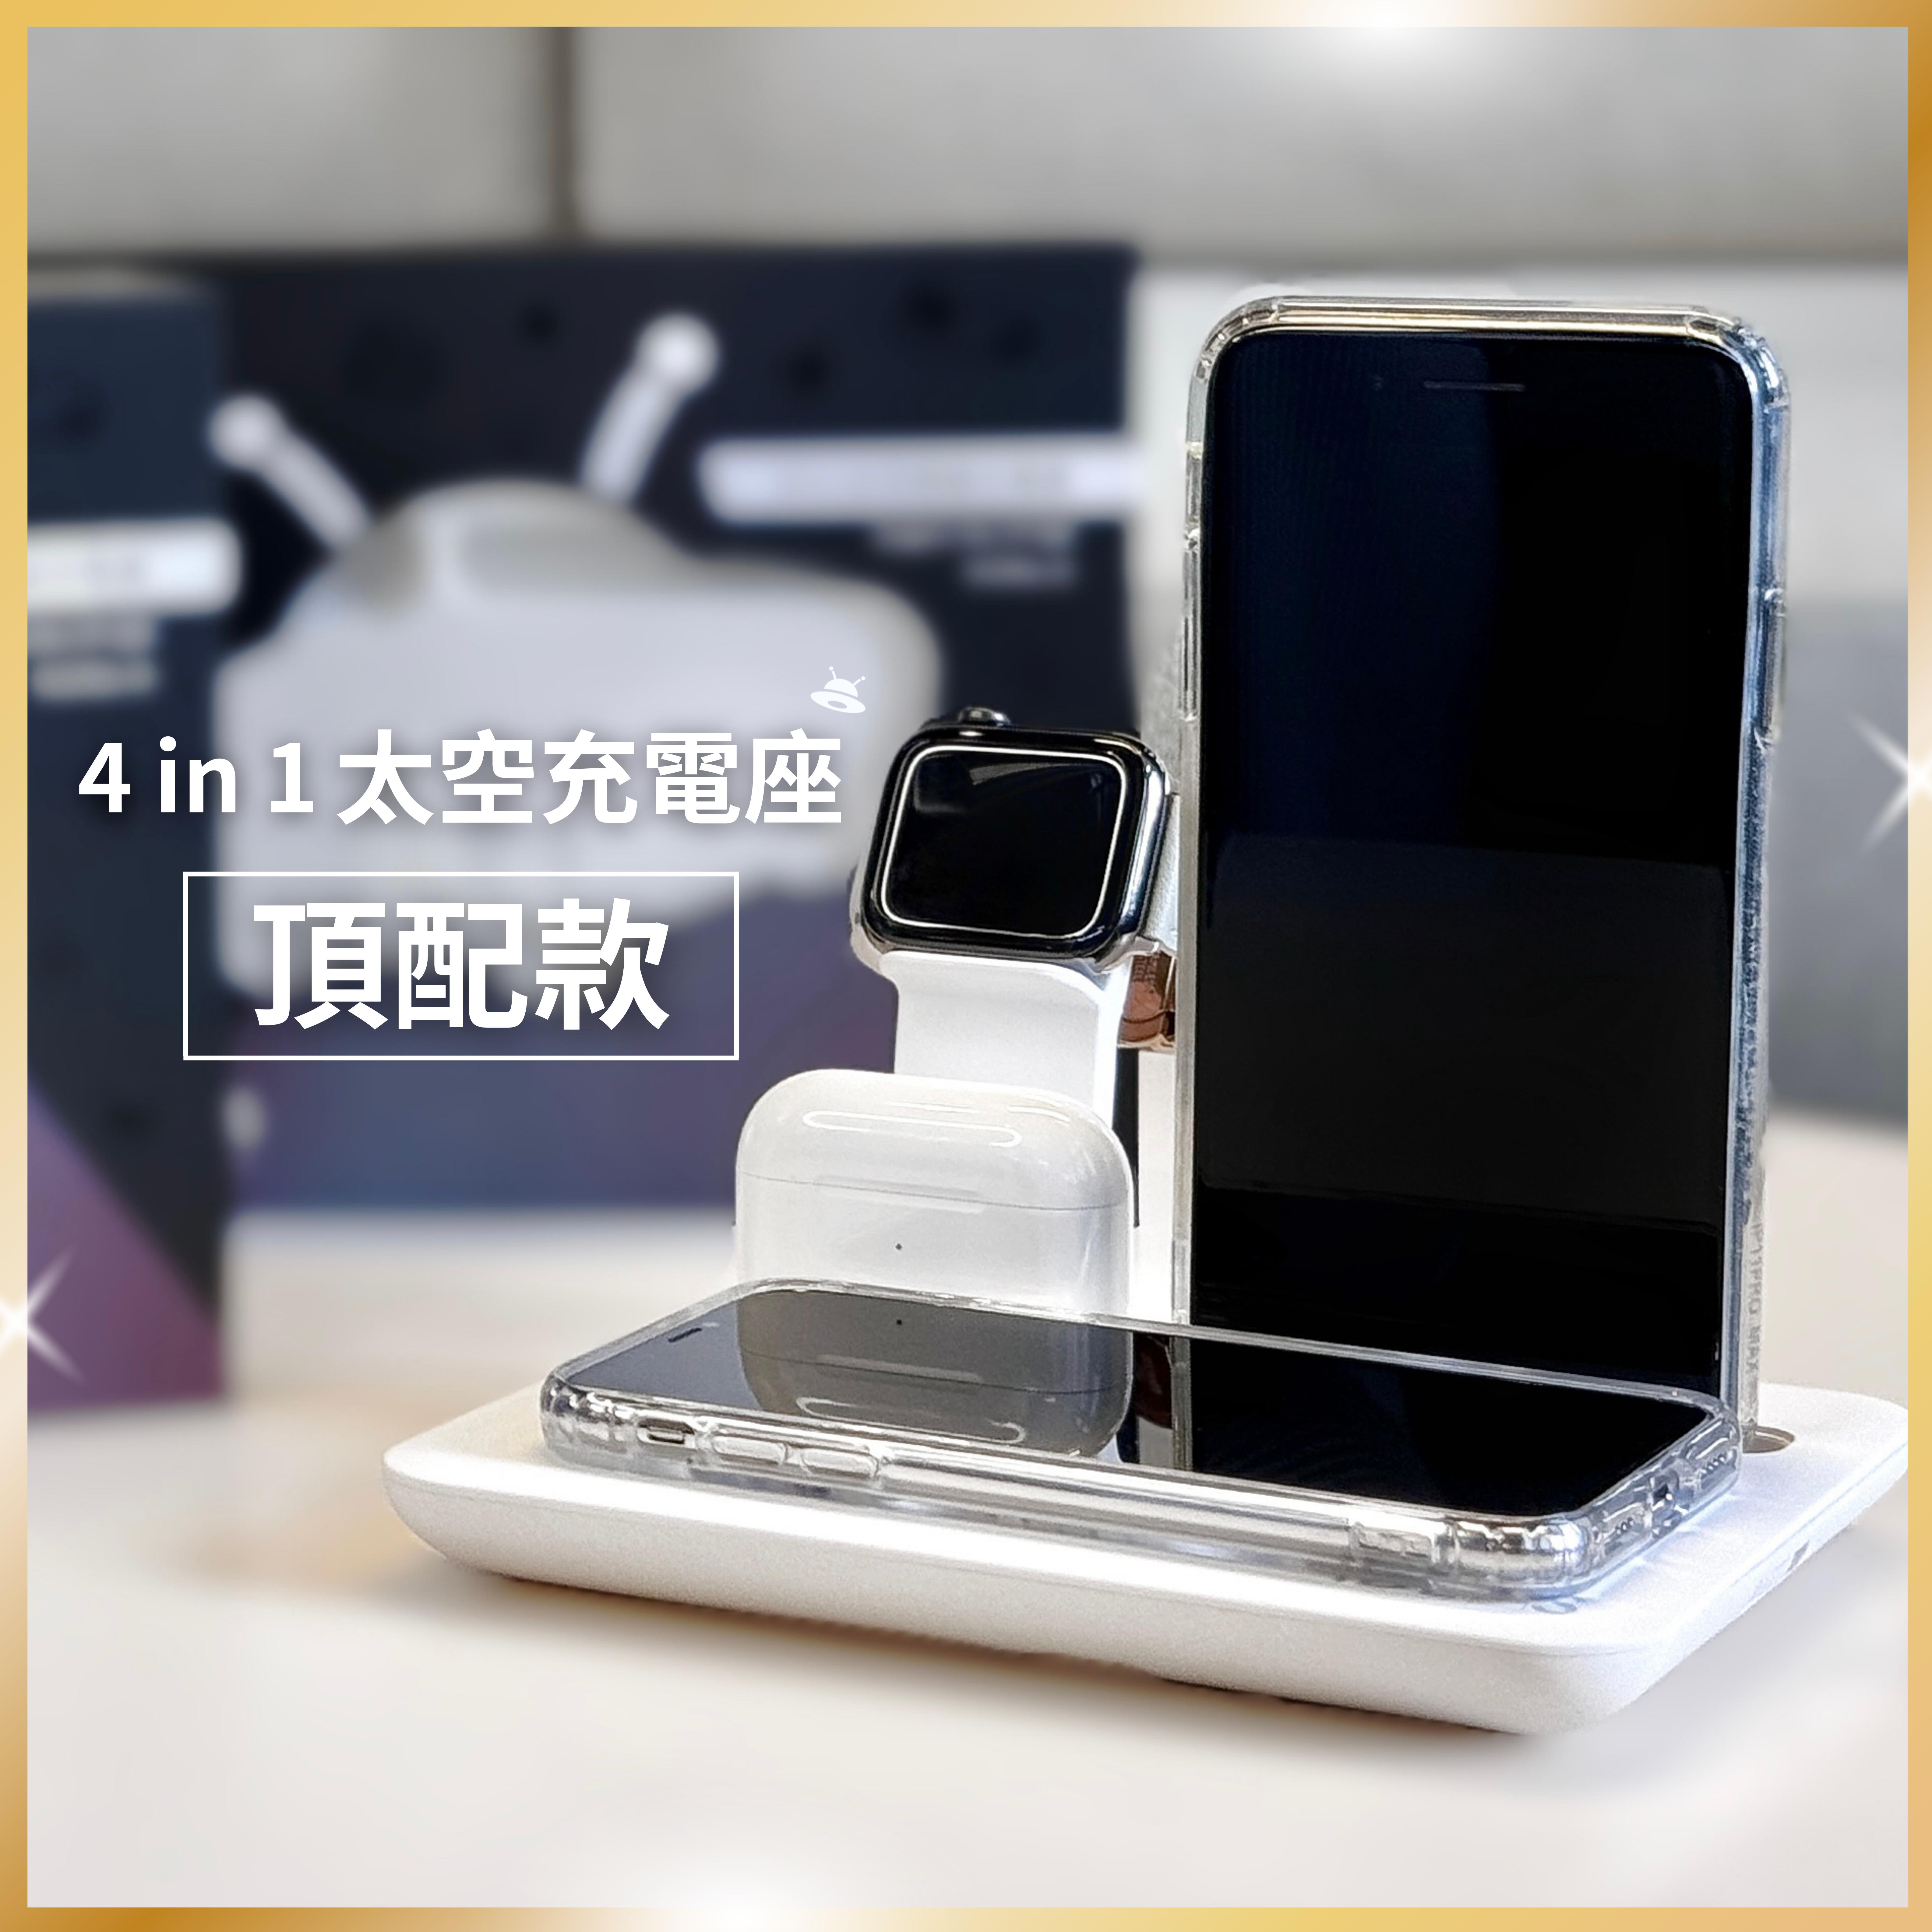 4in1太空充電站【頂配款】 蘋果/安卓 升級3.0